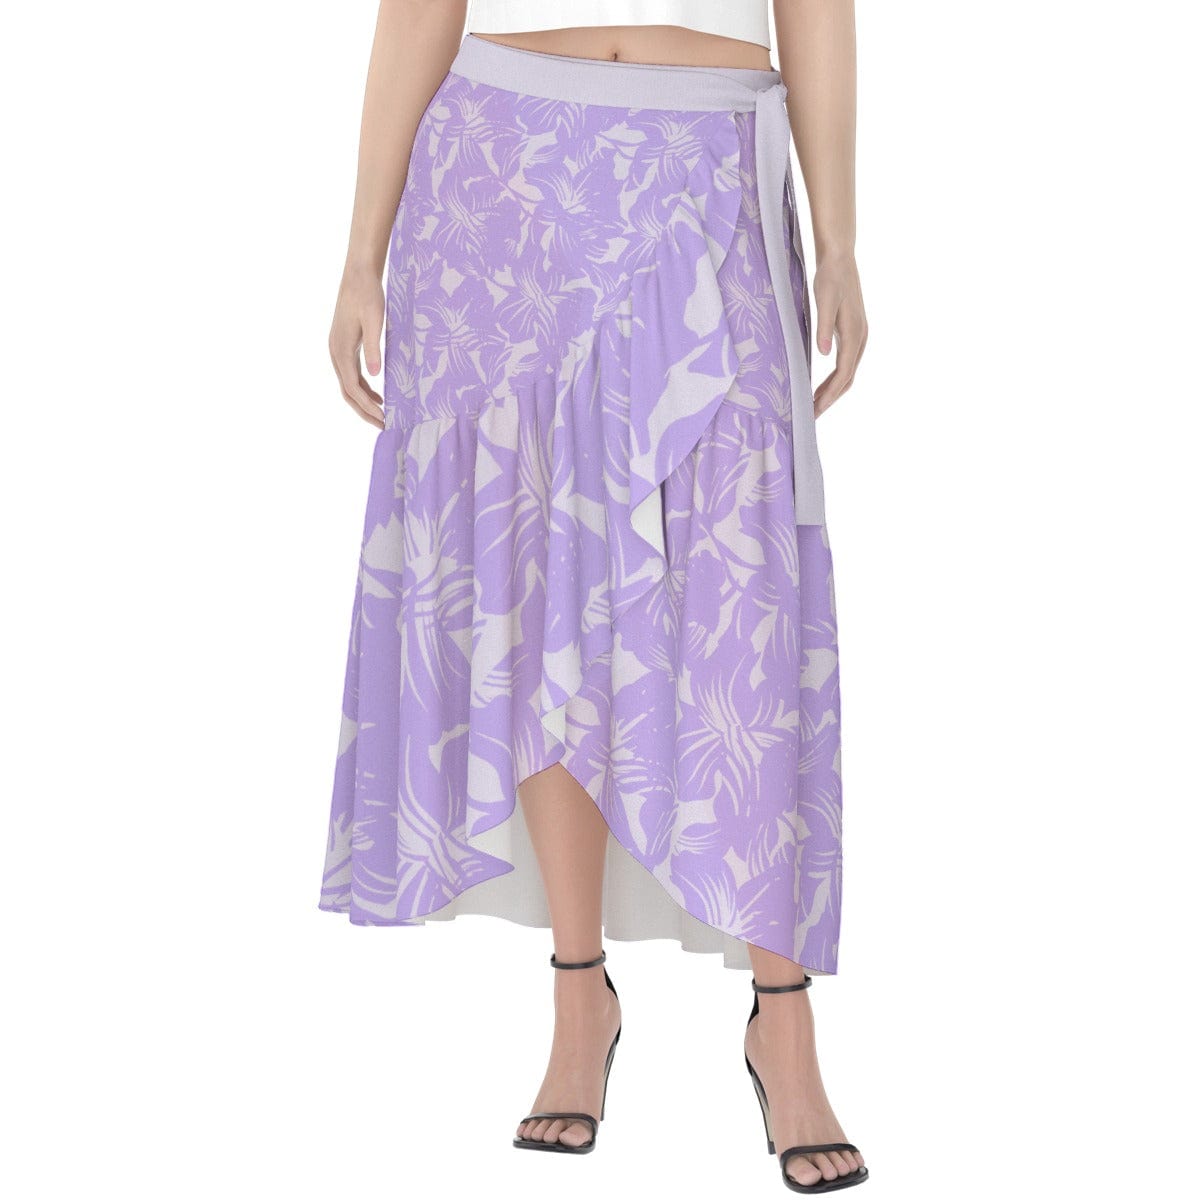 Yoycol Skirt Hawaiian Lavender - Women's Wrap Skirt